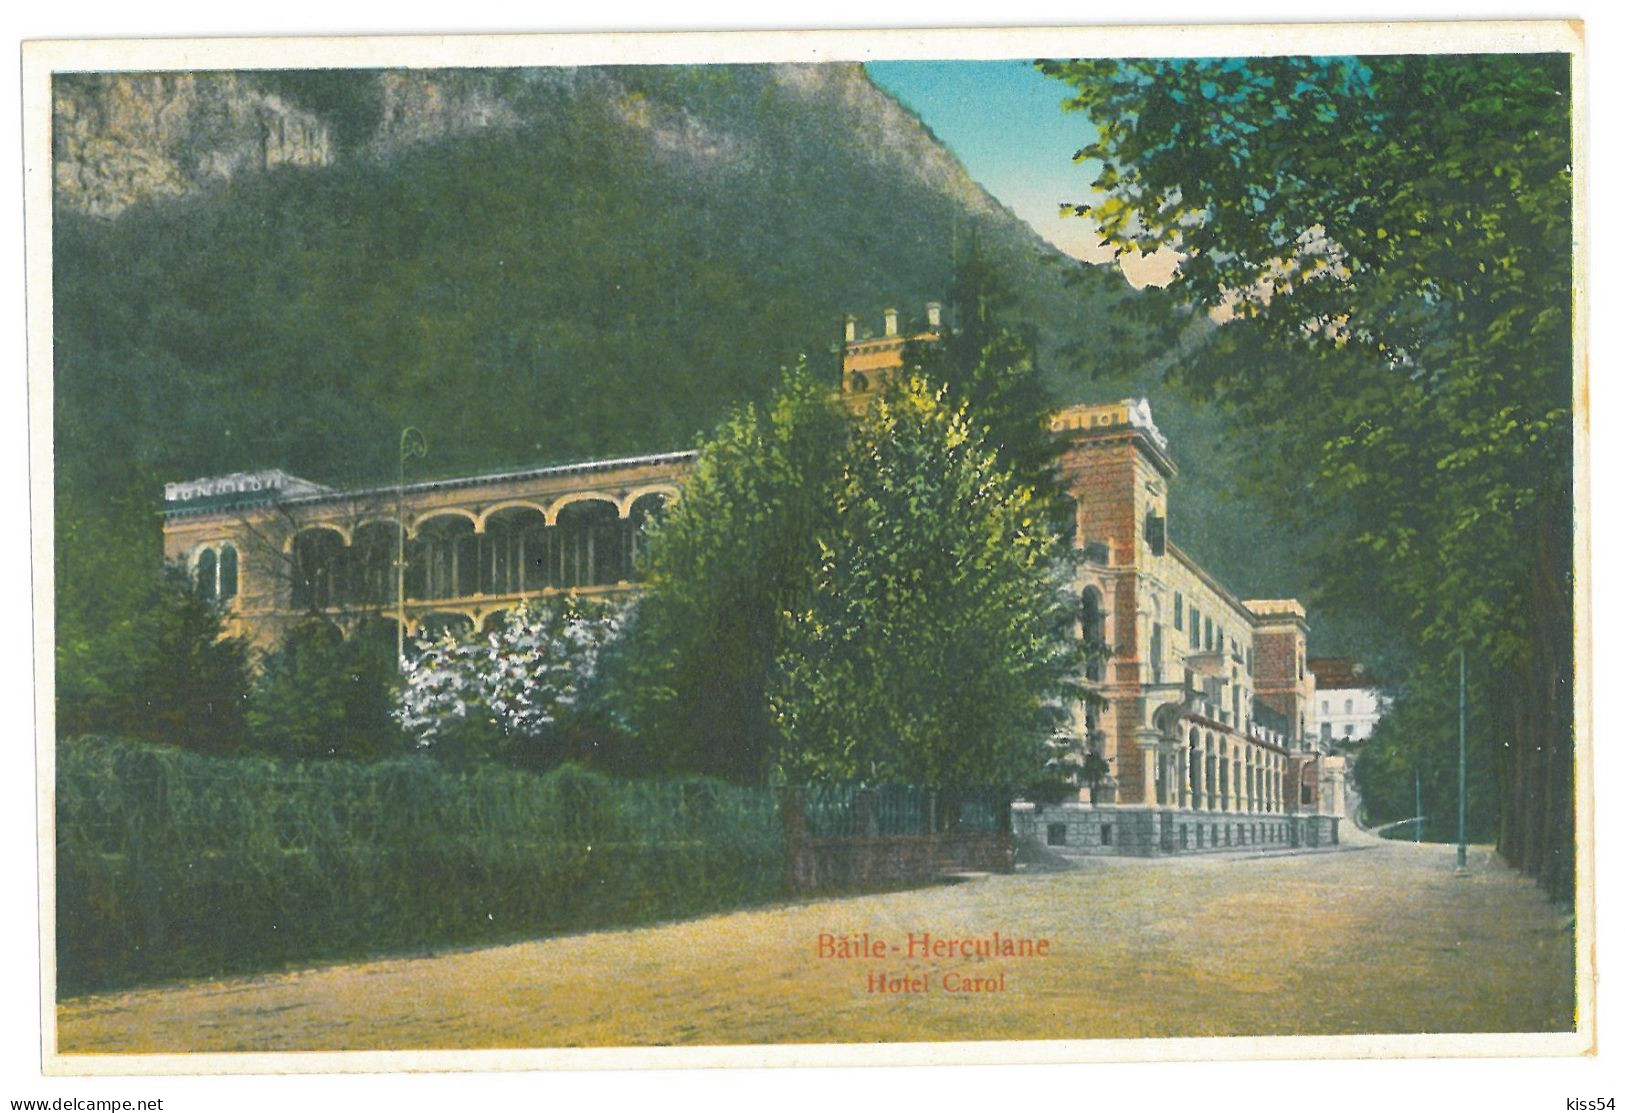 RO 47 - 25082 Baile HERCULANE, Carol Hotel, Romania - Old Postcard - Unused - Roumanie